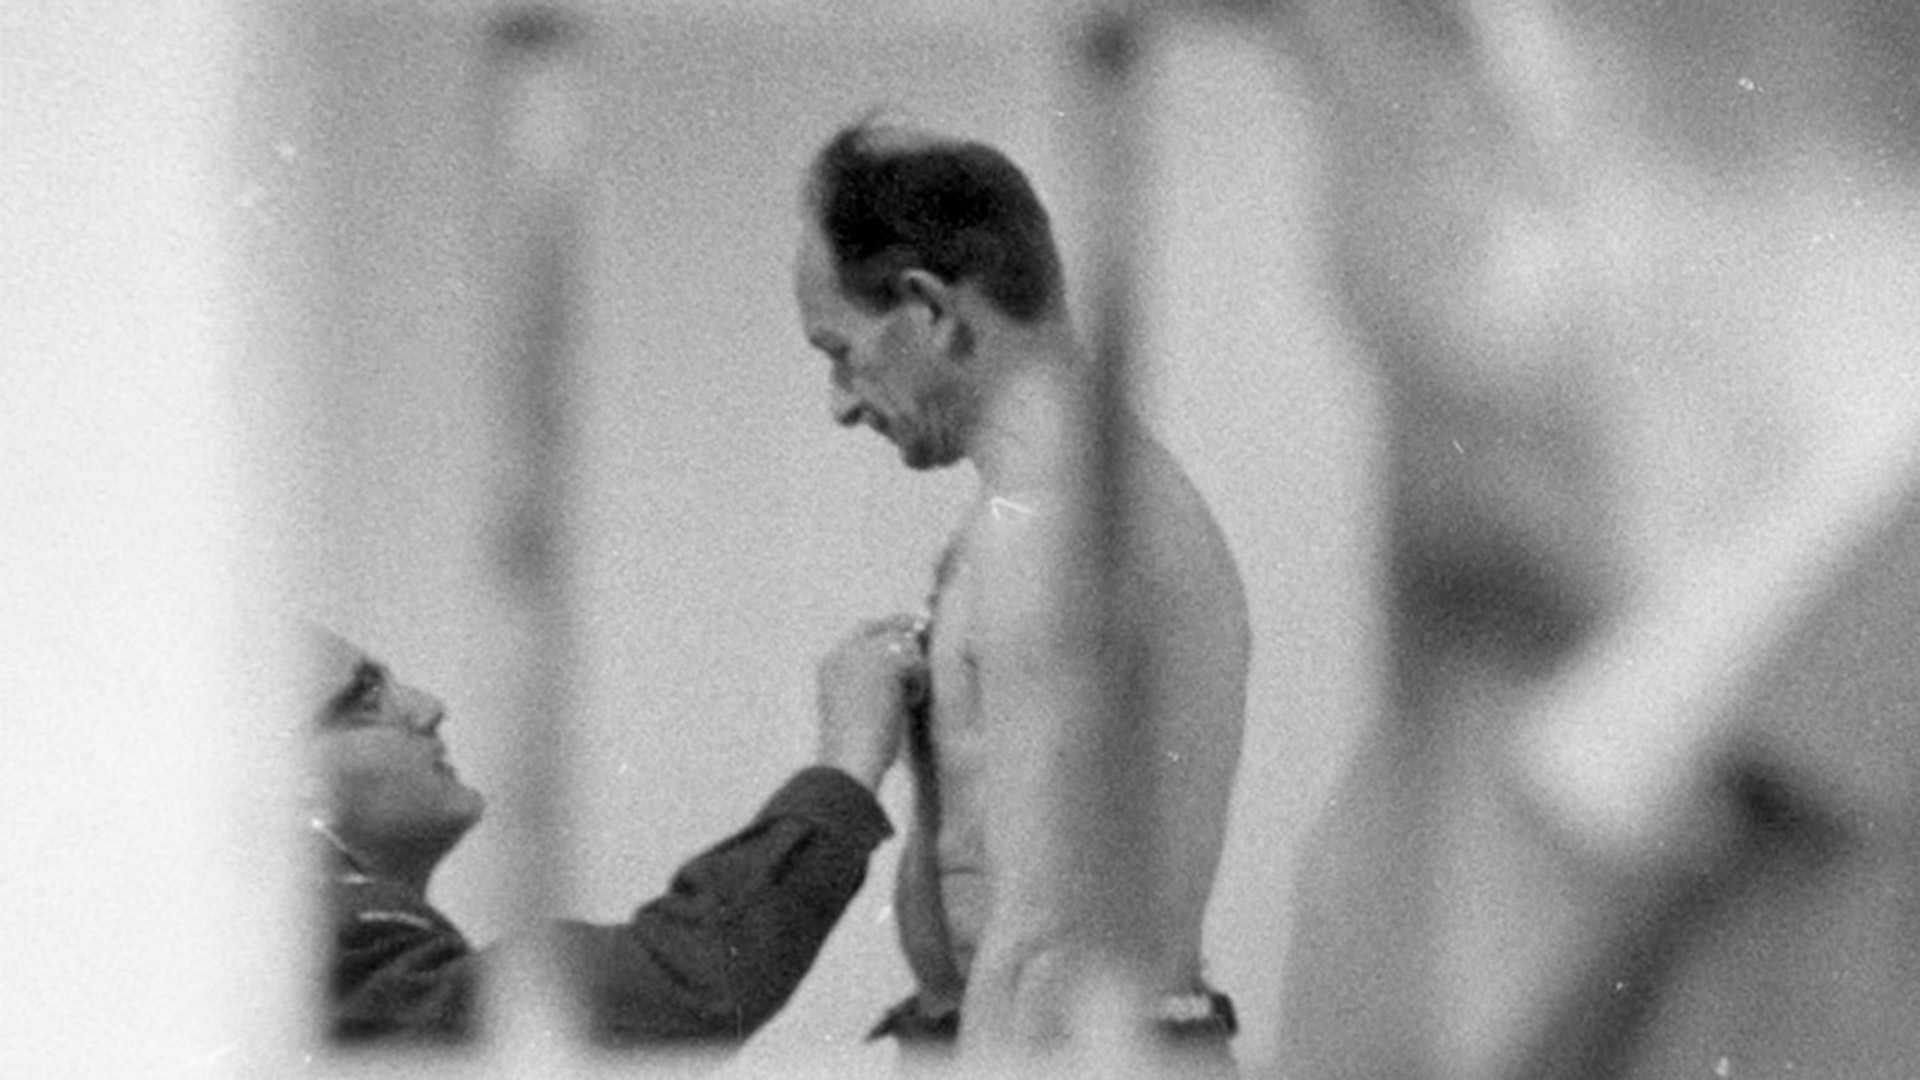 El examen físico de Eichmann en prisión (yadvashem.org)